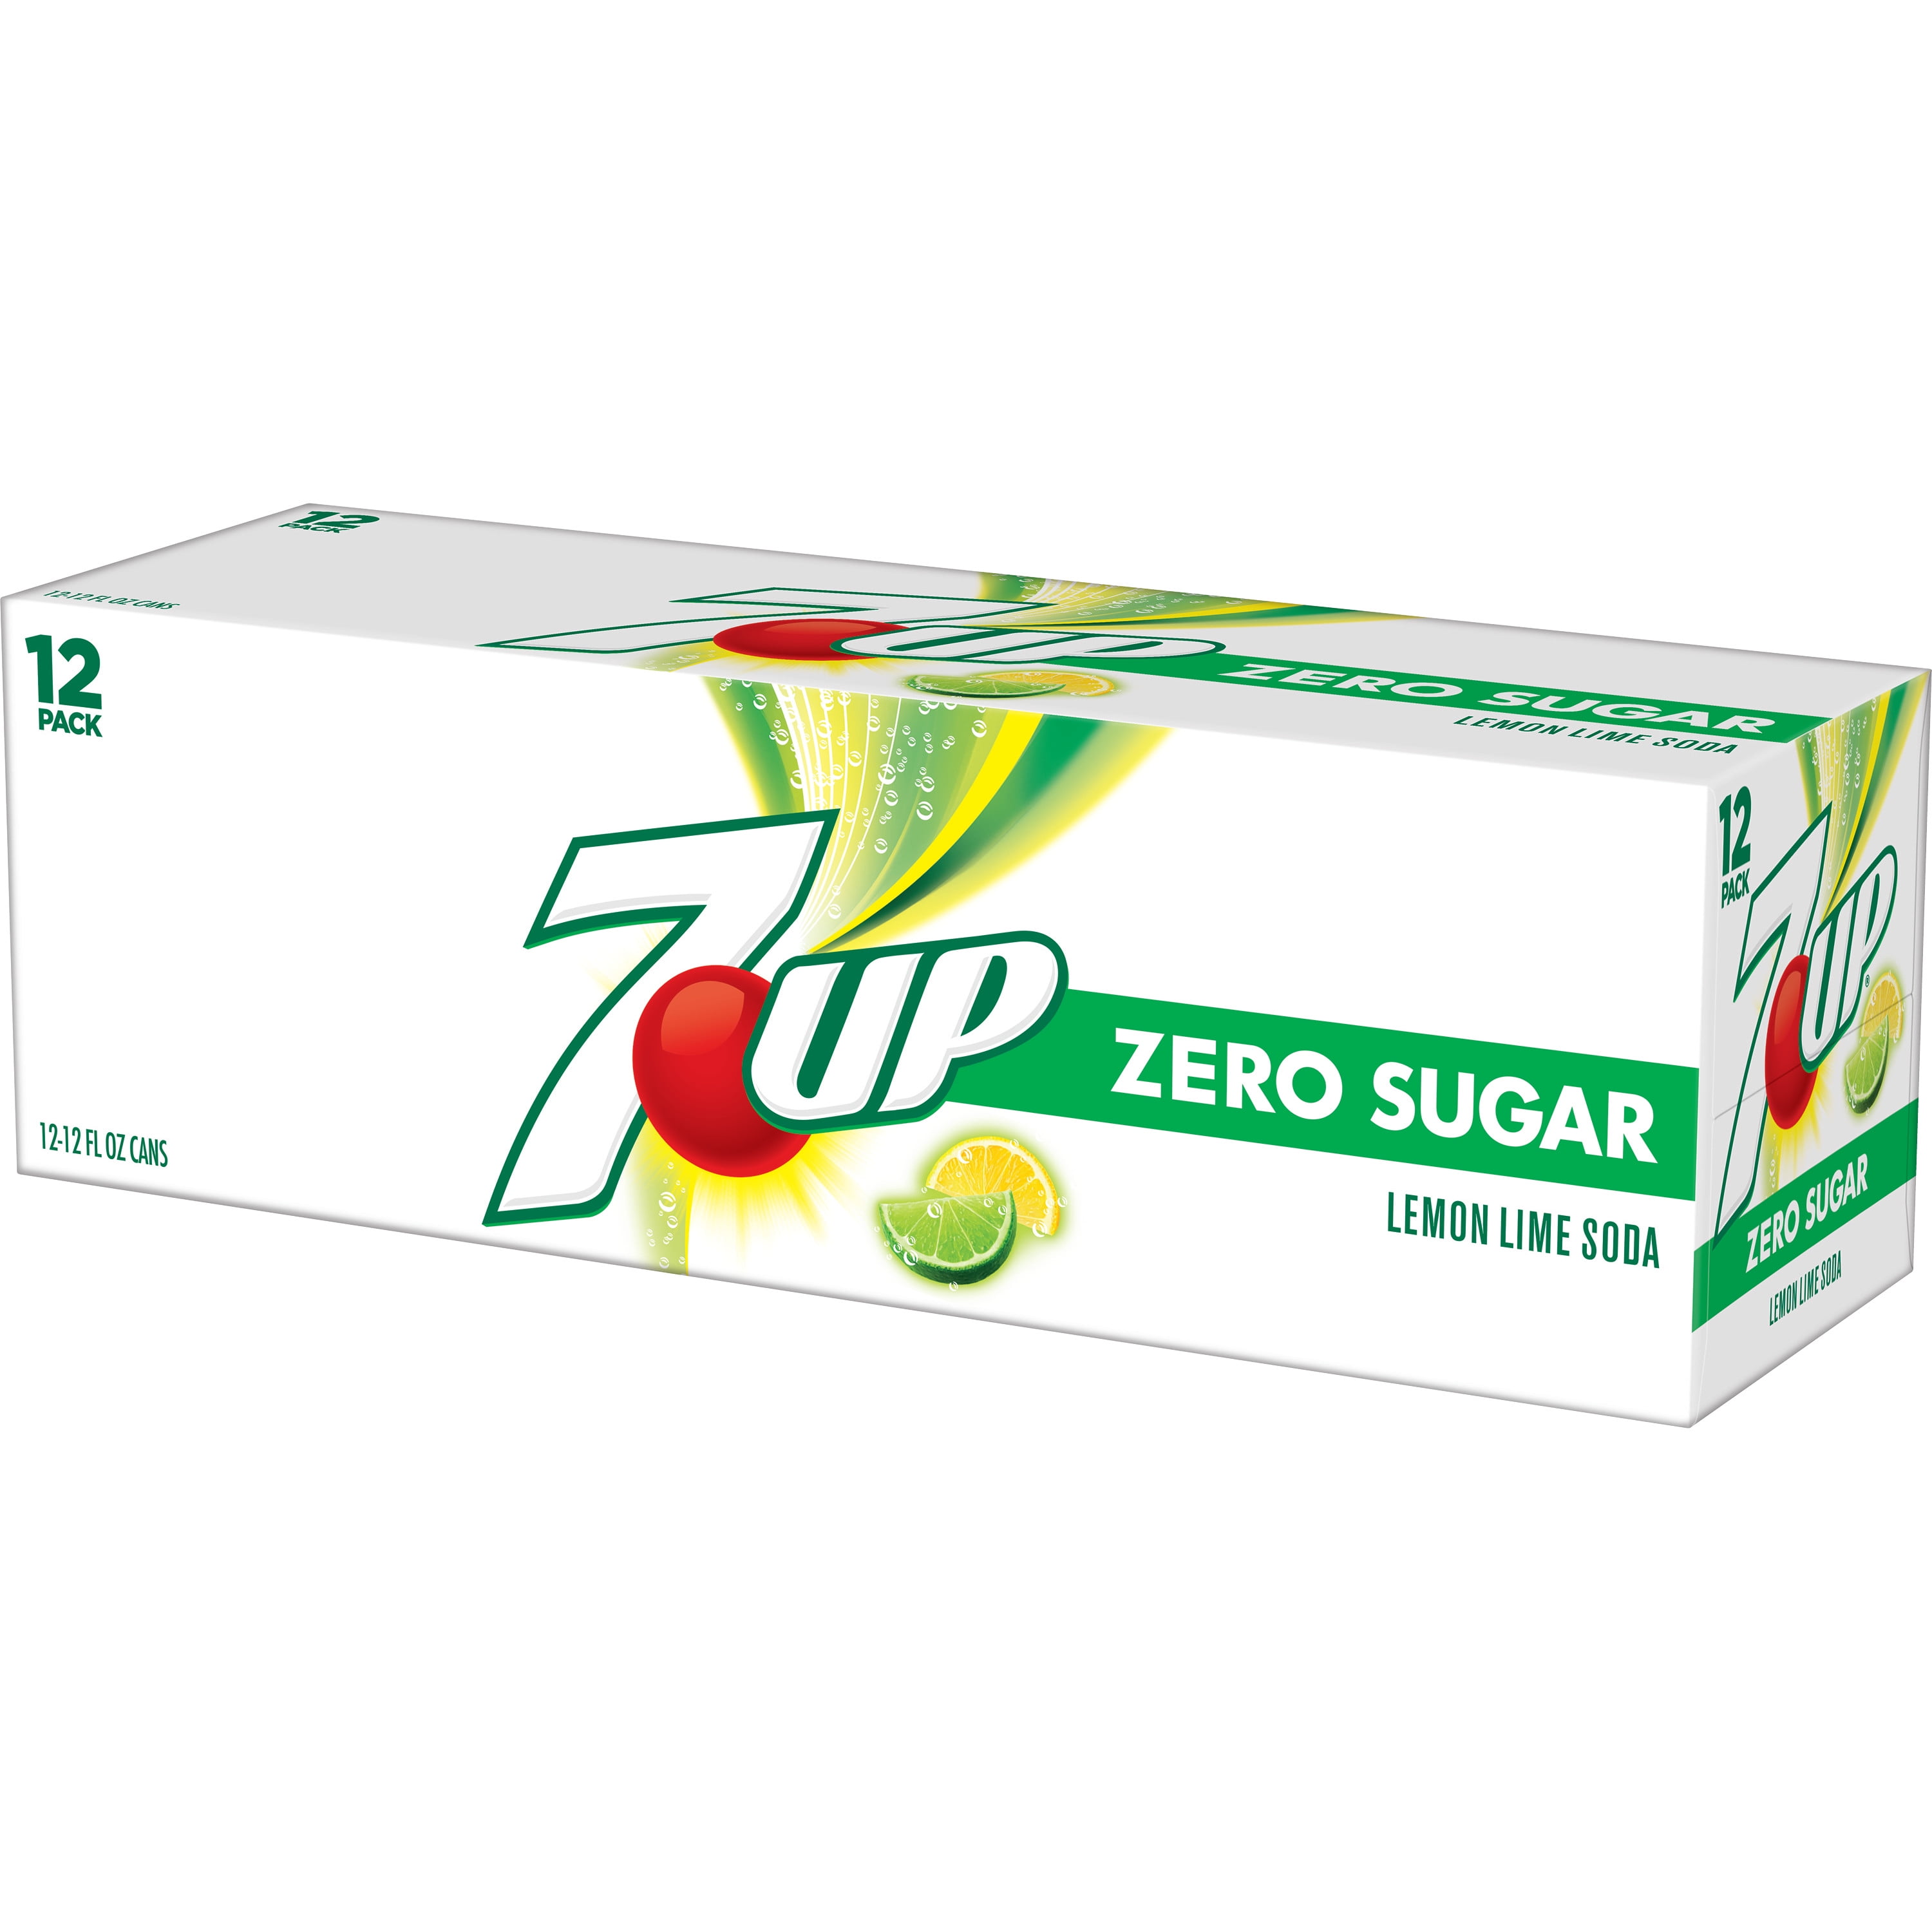 Pick 1 7UP Soda Pop 12 Pack 7 Up Seven Up Lemon Lime, Zero Sugar